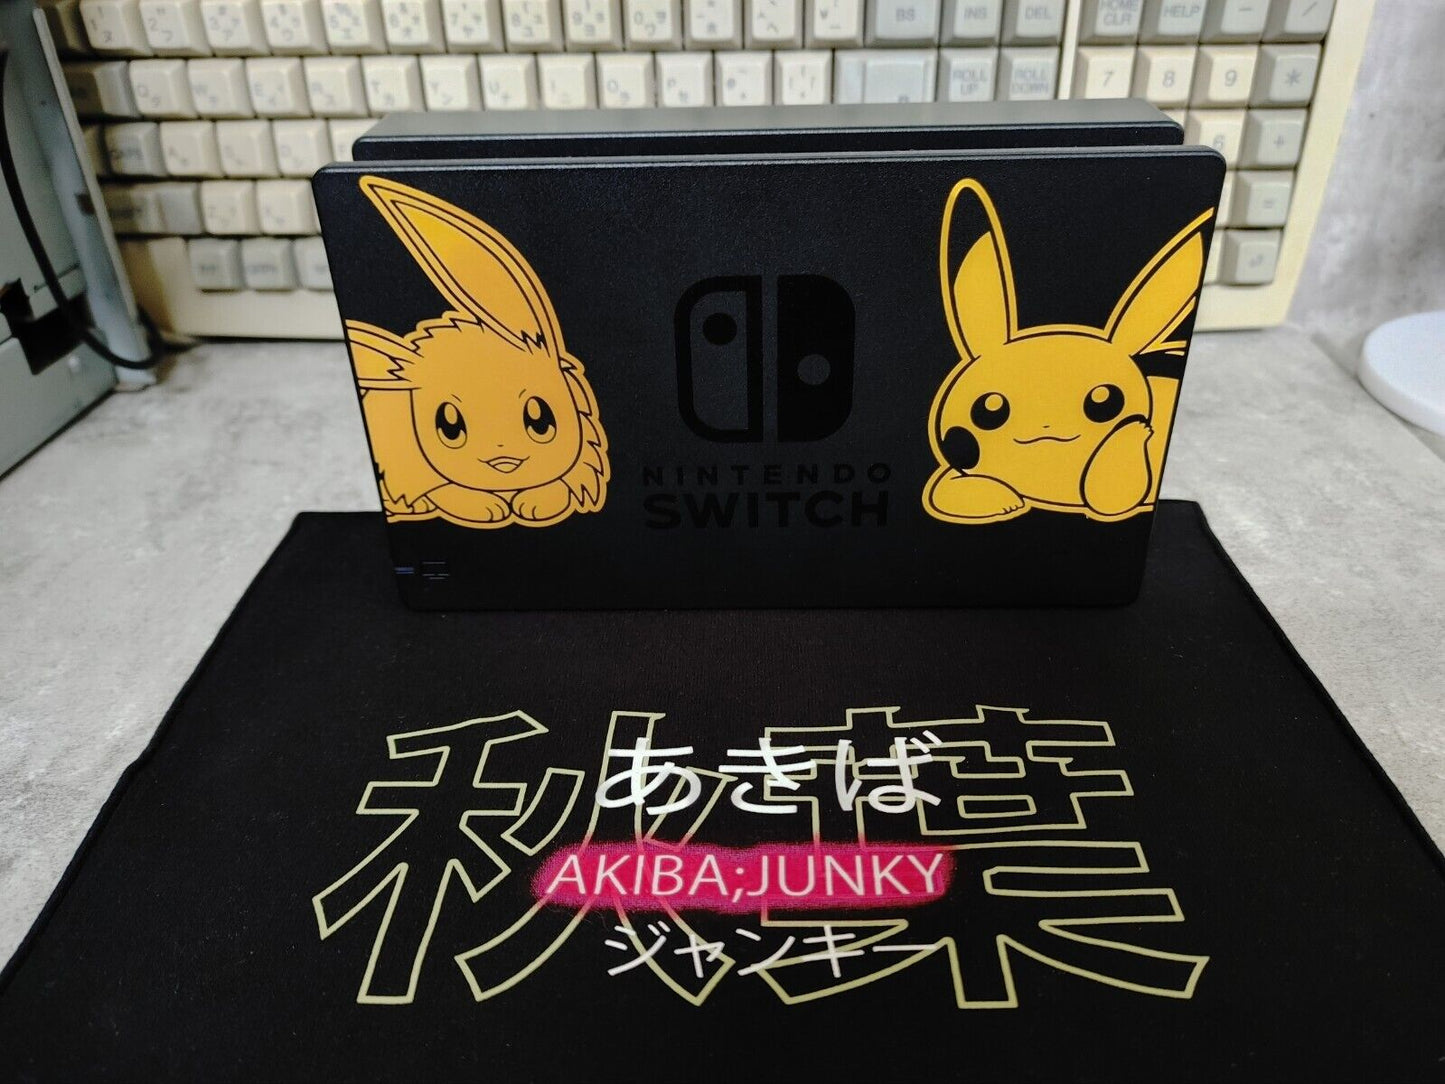 Nintendo Switch Genuine Dock Pokemon Let’s Go Limited Edition Pikachu Eevee JP